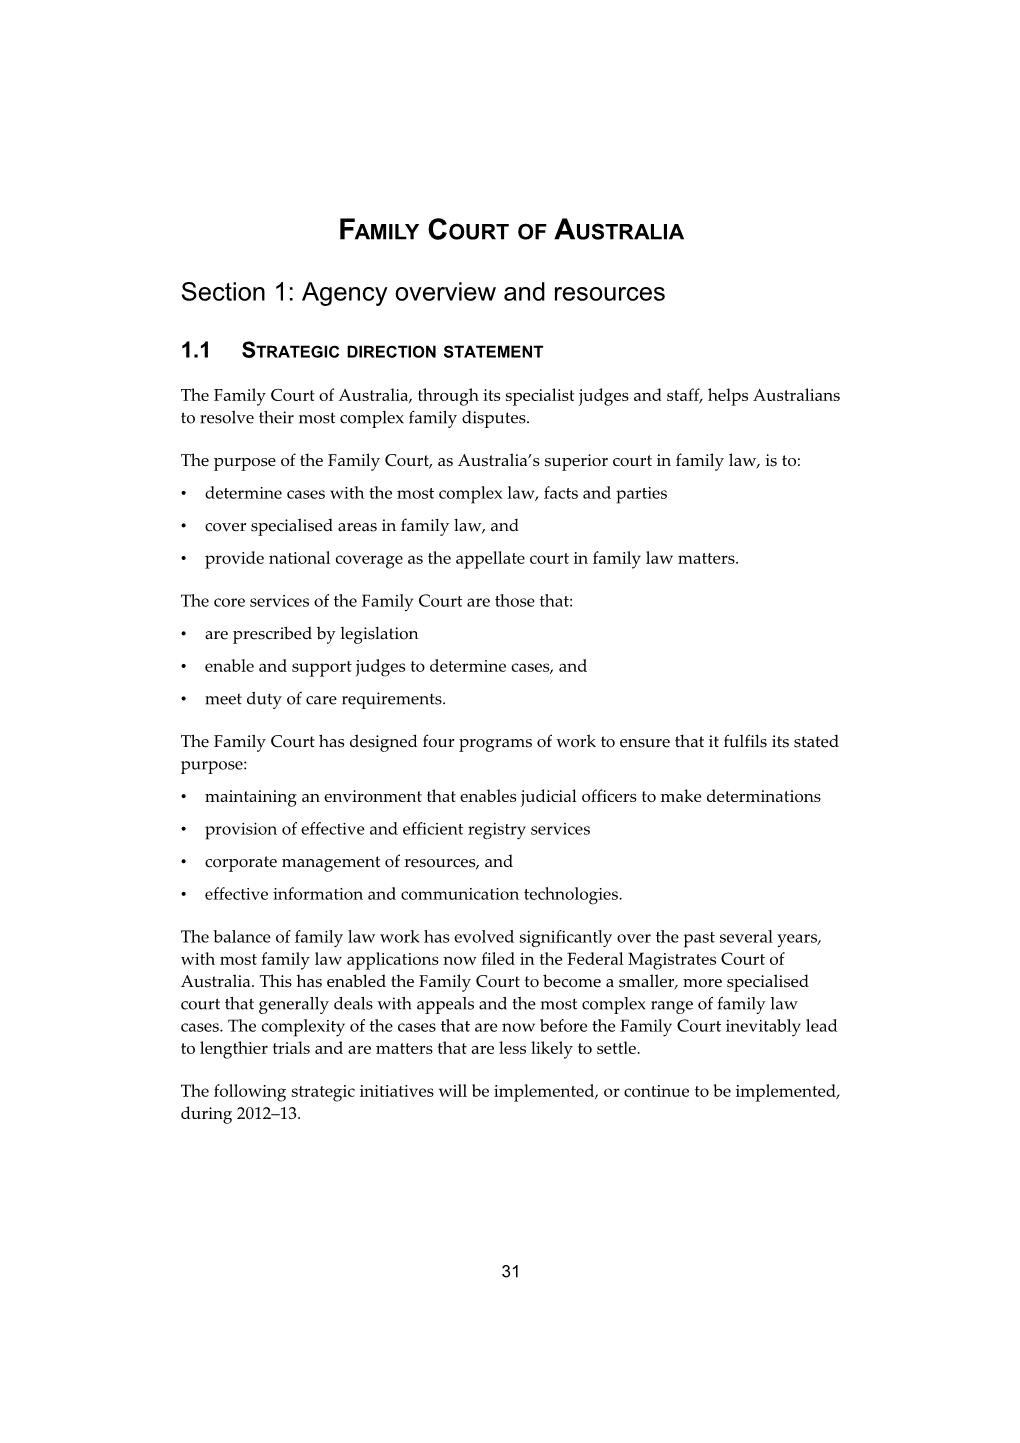 Portfolio Budget Statements 2012-13 - Family Court